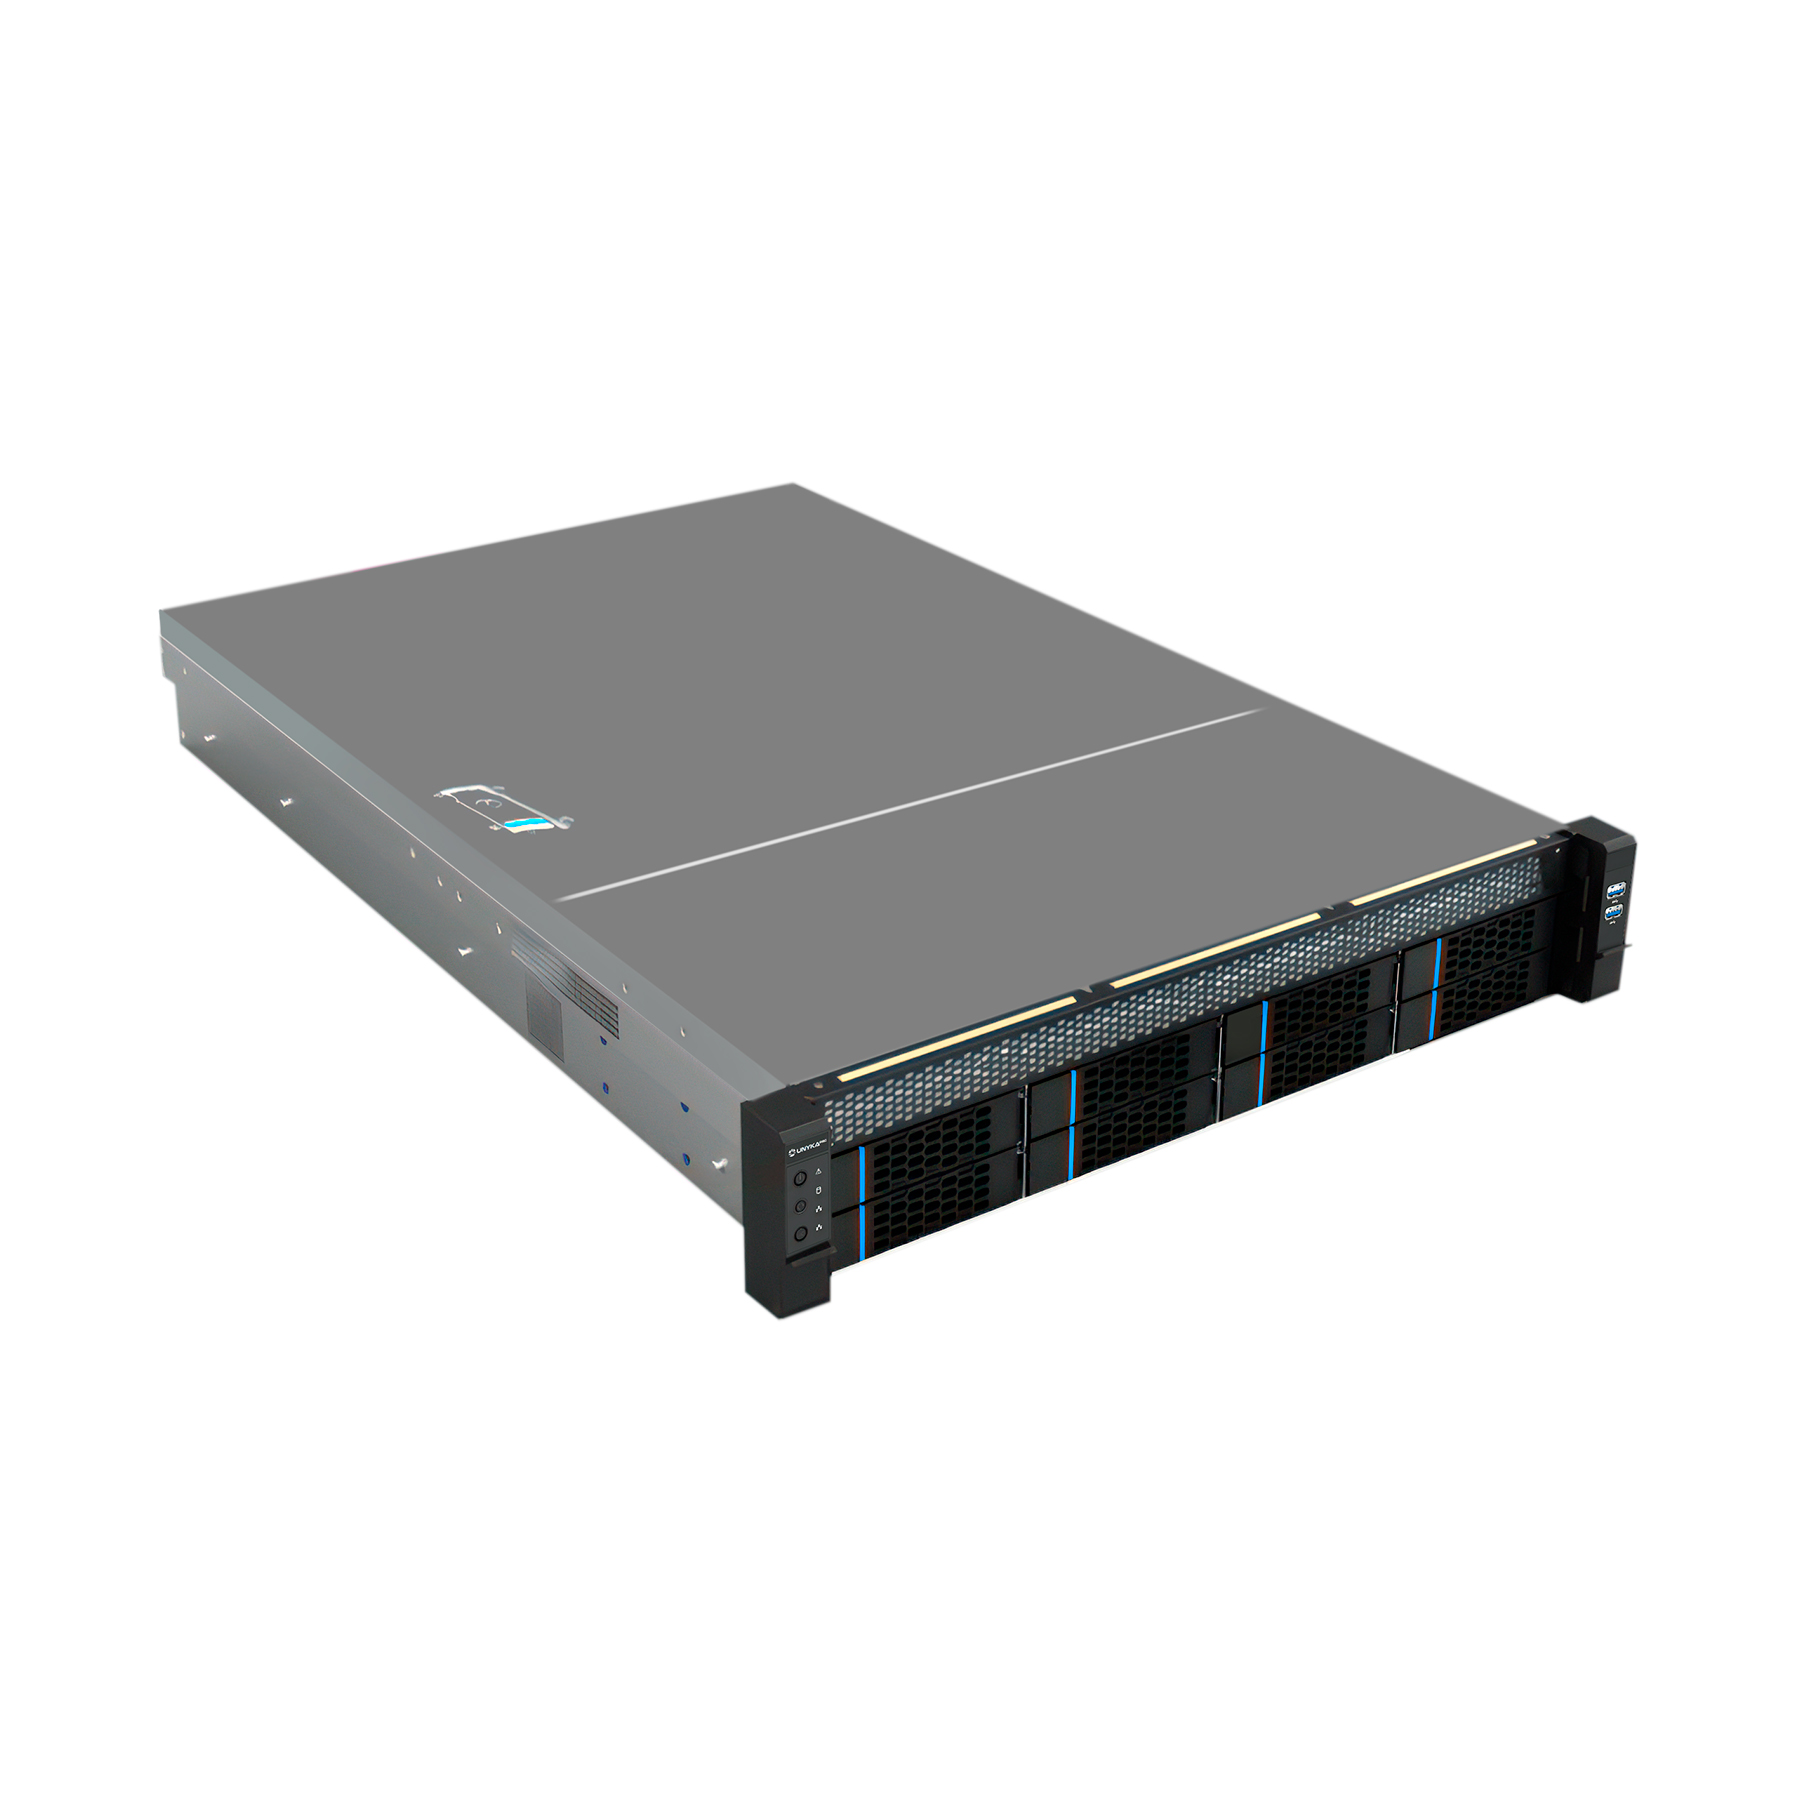 Unykach HSW4208 G3 2U Rack Server 8 baies Hot Swap - Tailles de disques prises en charge 2,5", 3,5" - Cartes mères compatibles EEB, CEB, ATX, MicroATX - USB-A 3.0, 2 Mini SAS 12 Gbit/s, 4 Molex - 4 ventilateurs de 80 mm inclus